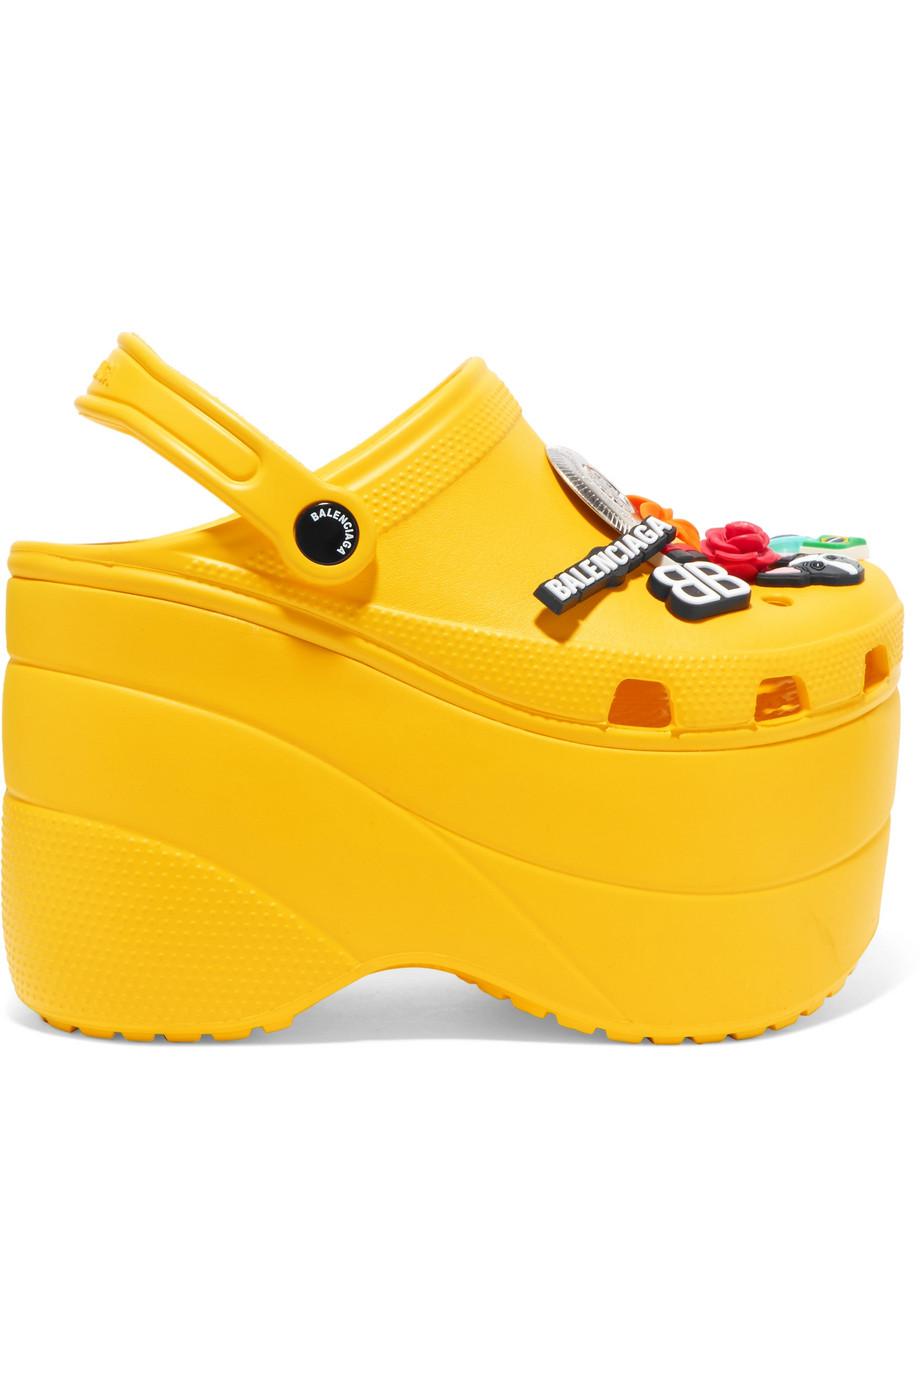 Balenciaga + Crocs Embellished Rubber Platform Sandals in Yellow | Lyst